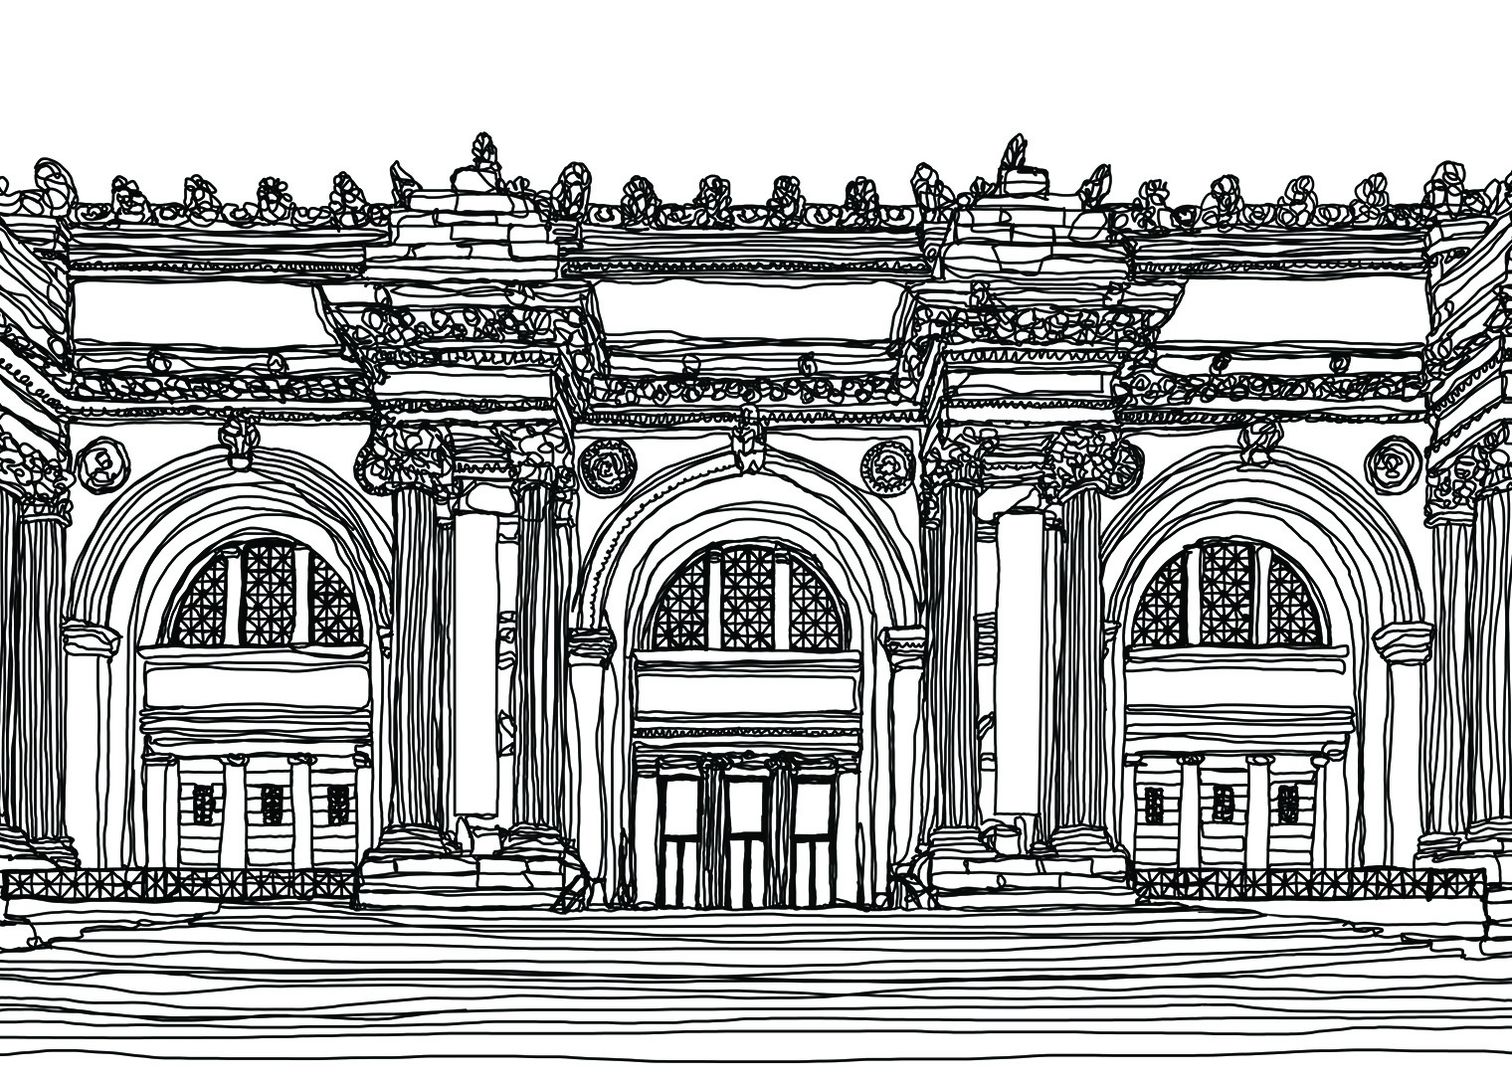 Graphic of The Met's Facade in black lines. 